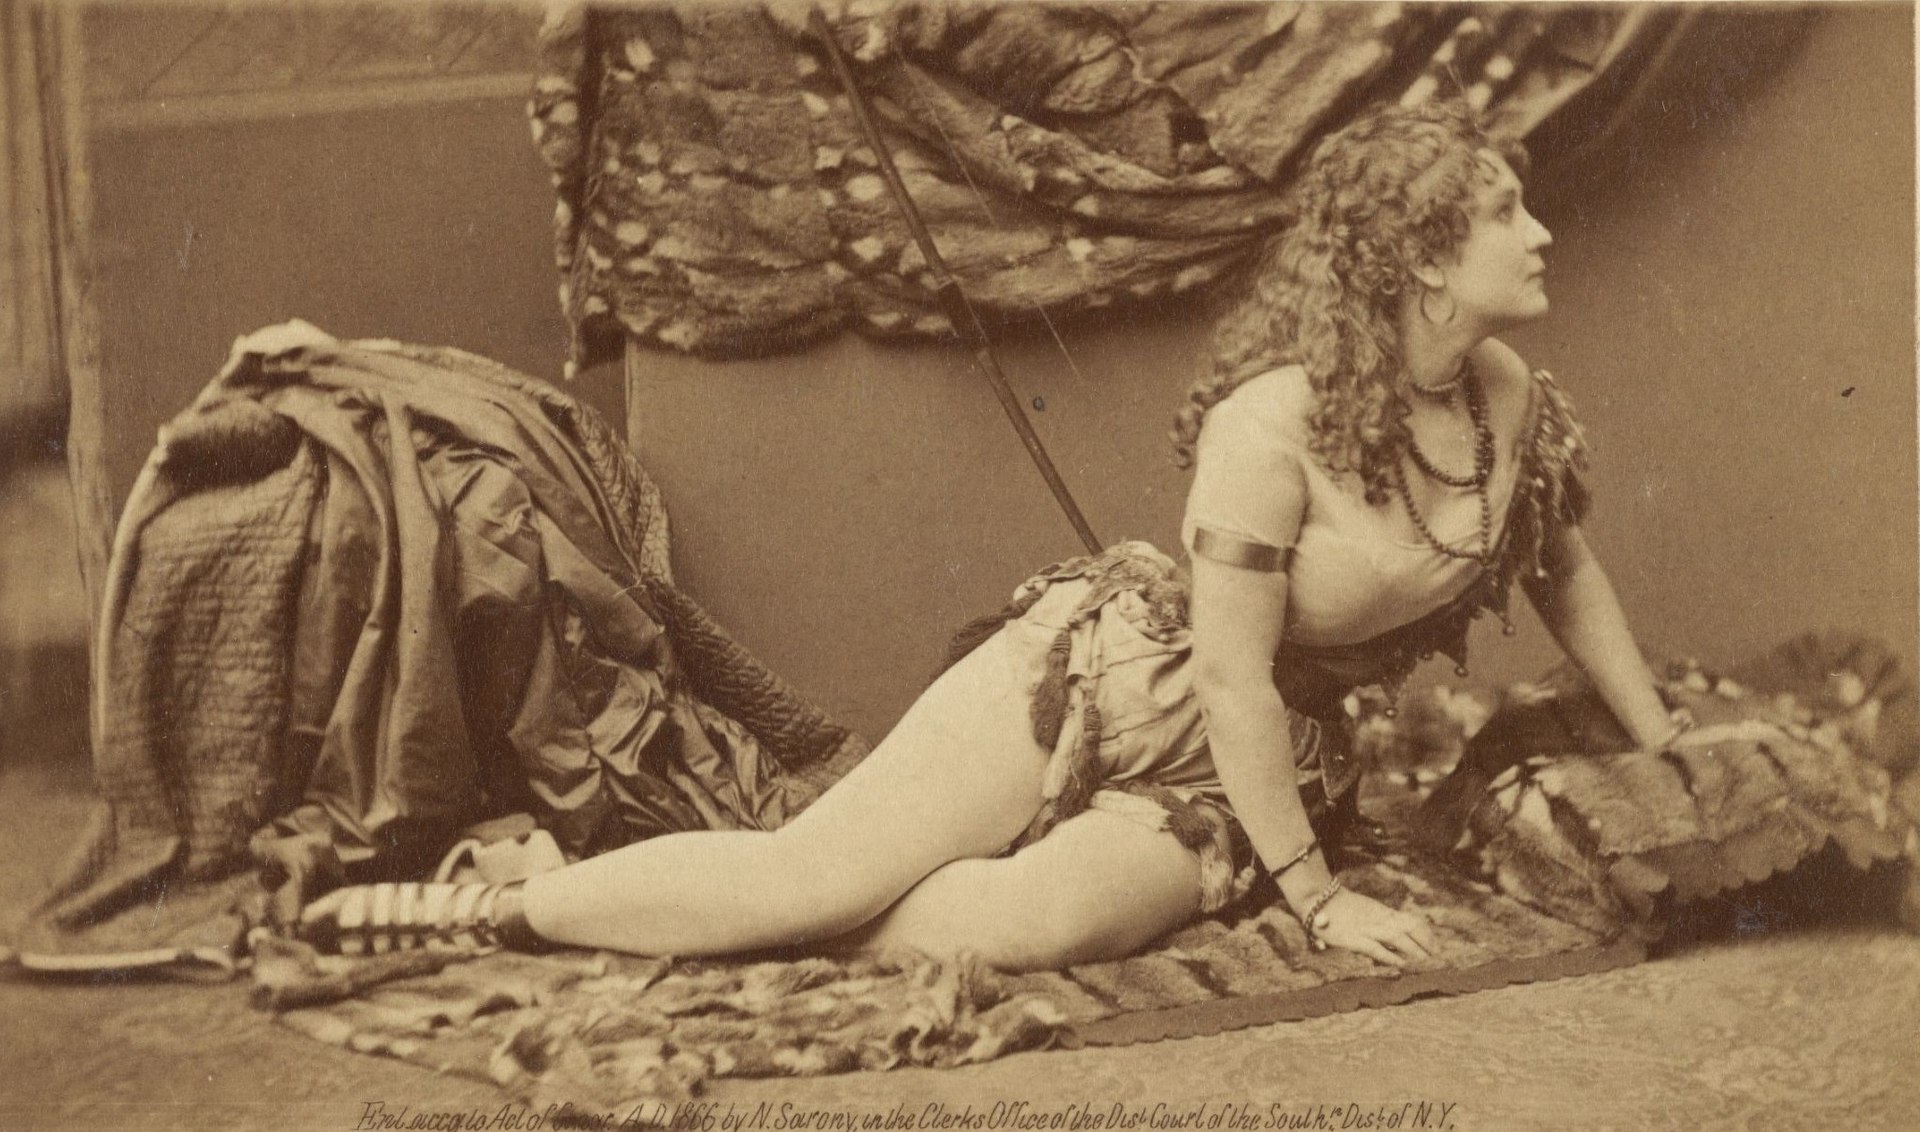 19th Century Sexuality - Public Women: Sex in 19th-century America â€” The Exploress